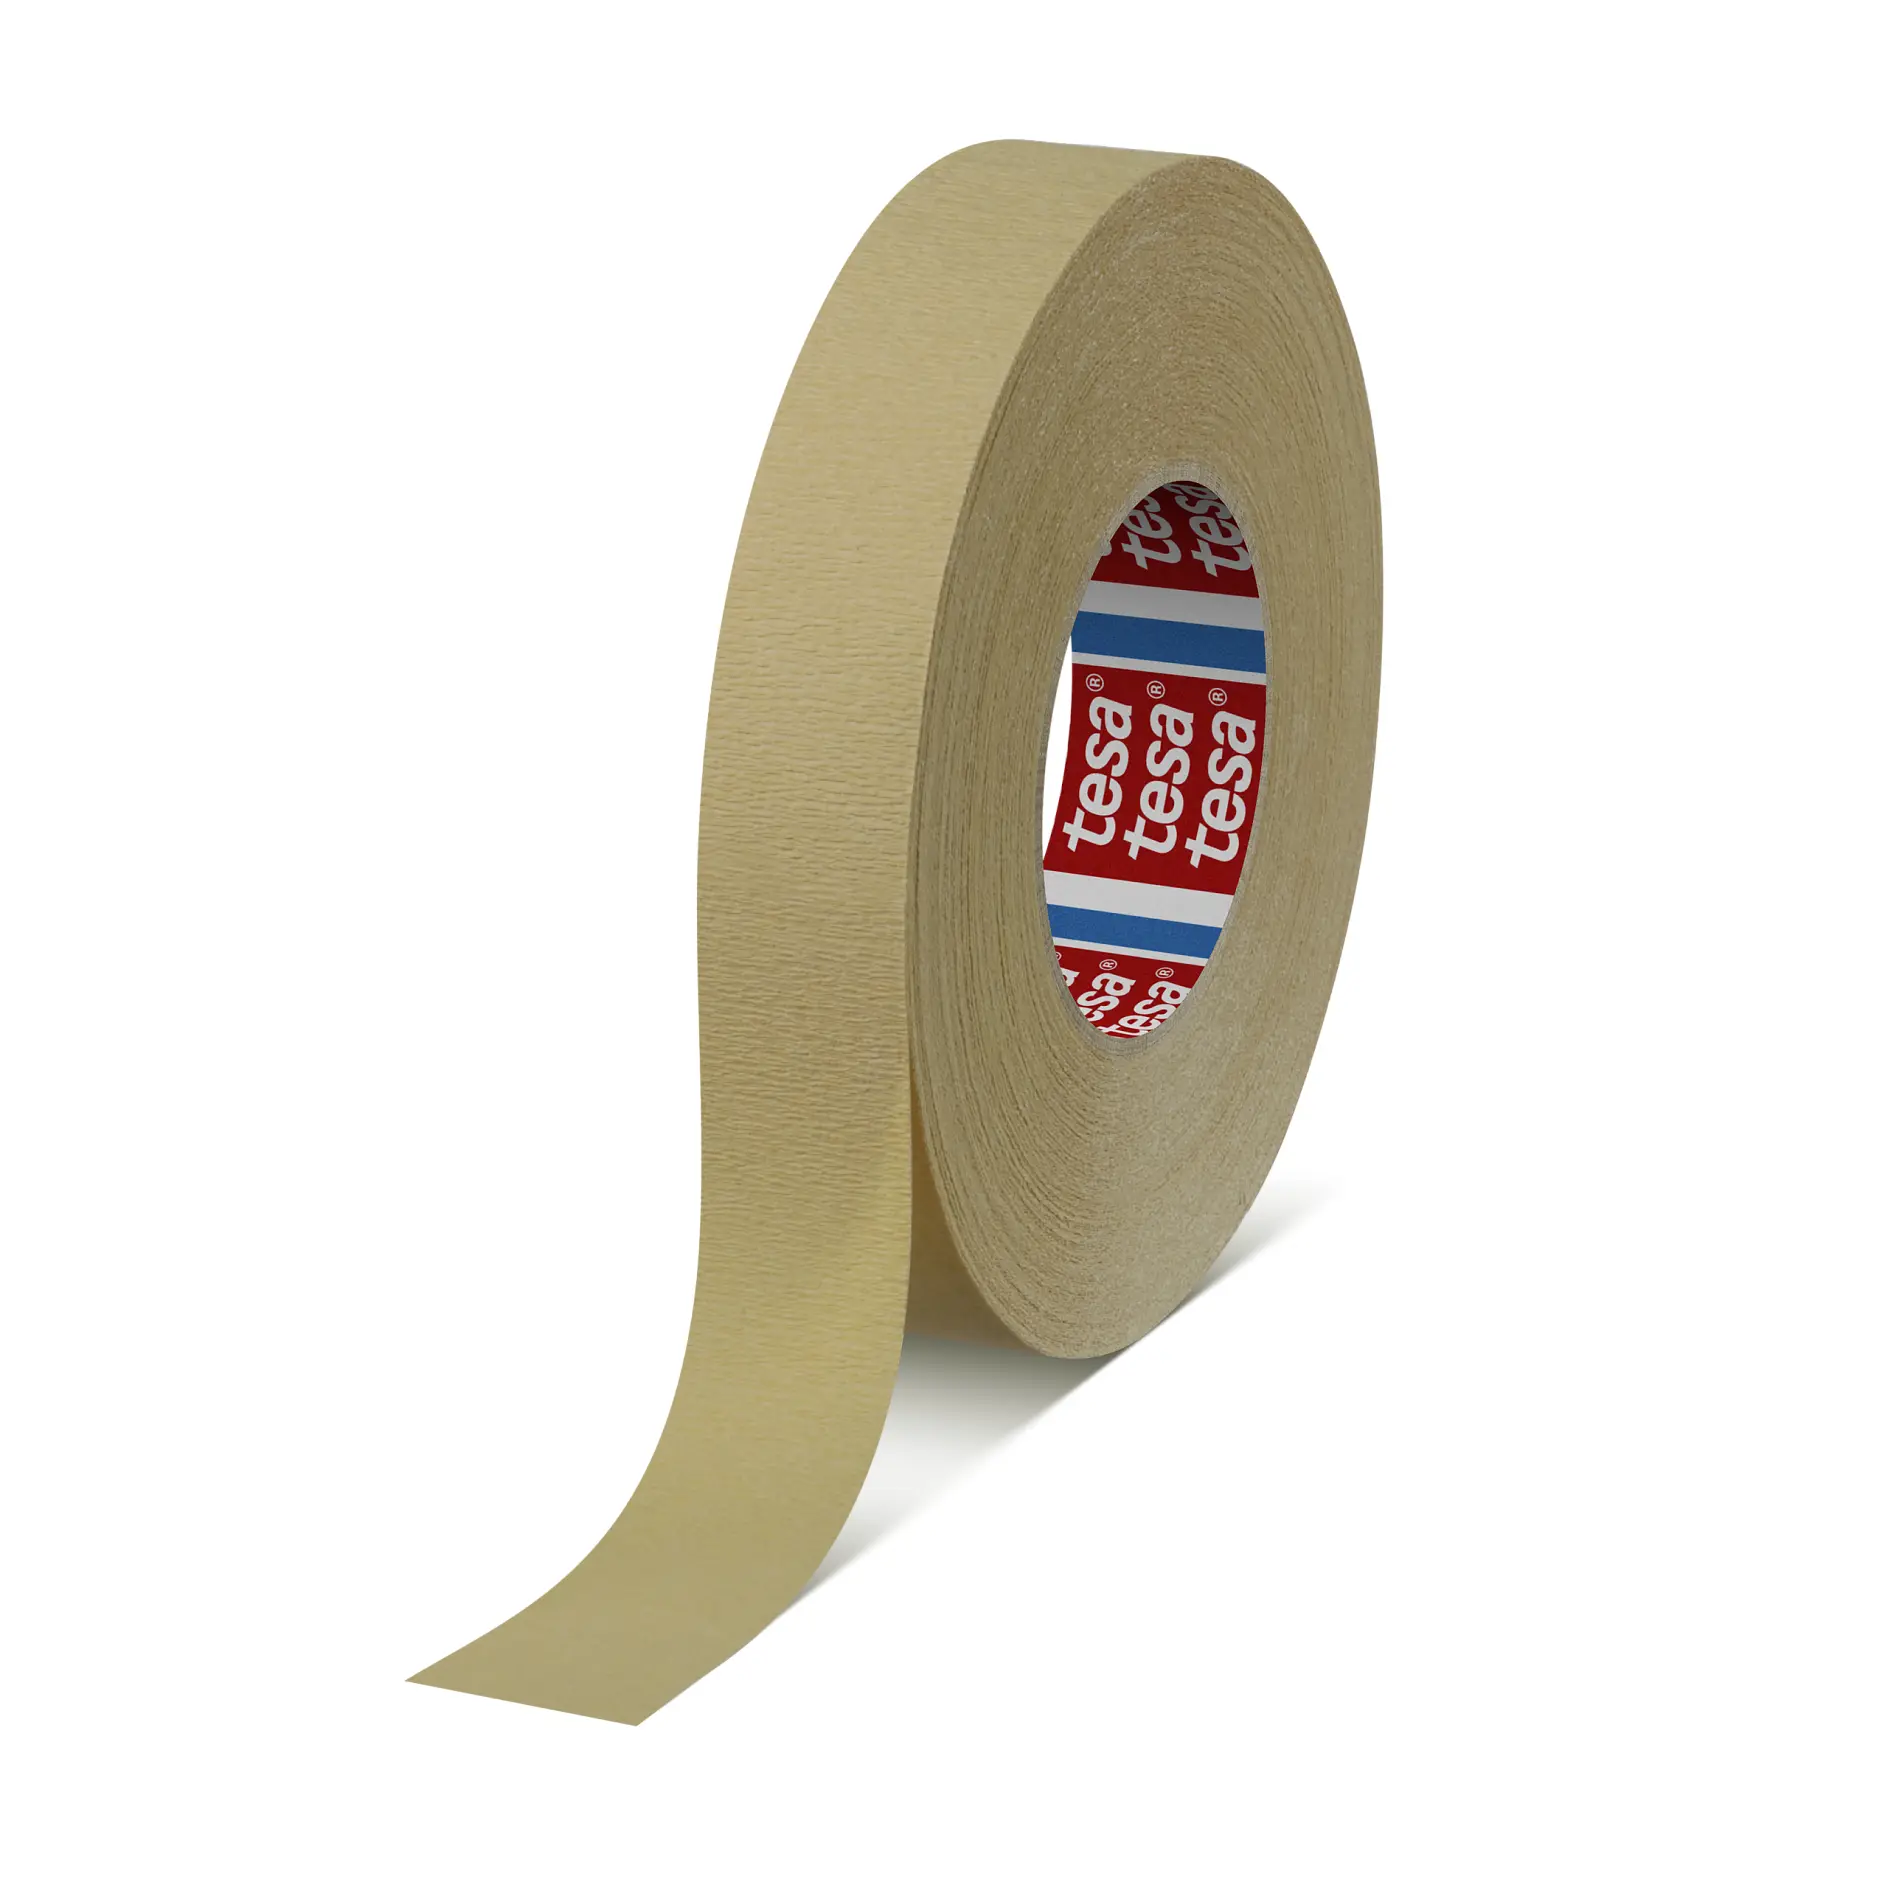 tesa-4322-stretchable-paper-masking-tape-packaging-brown-043220001000-pr